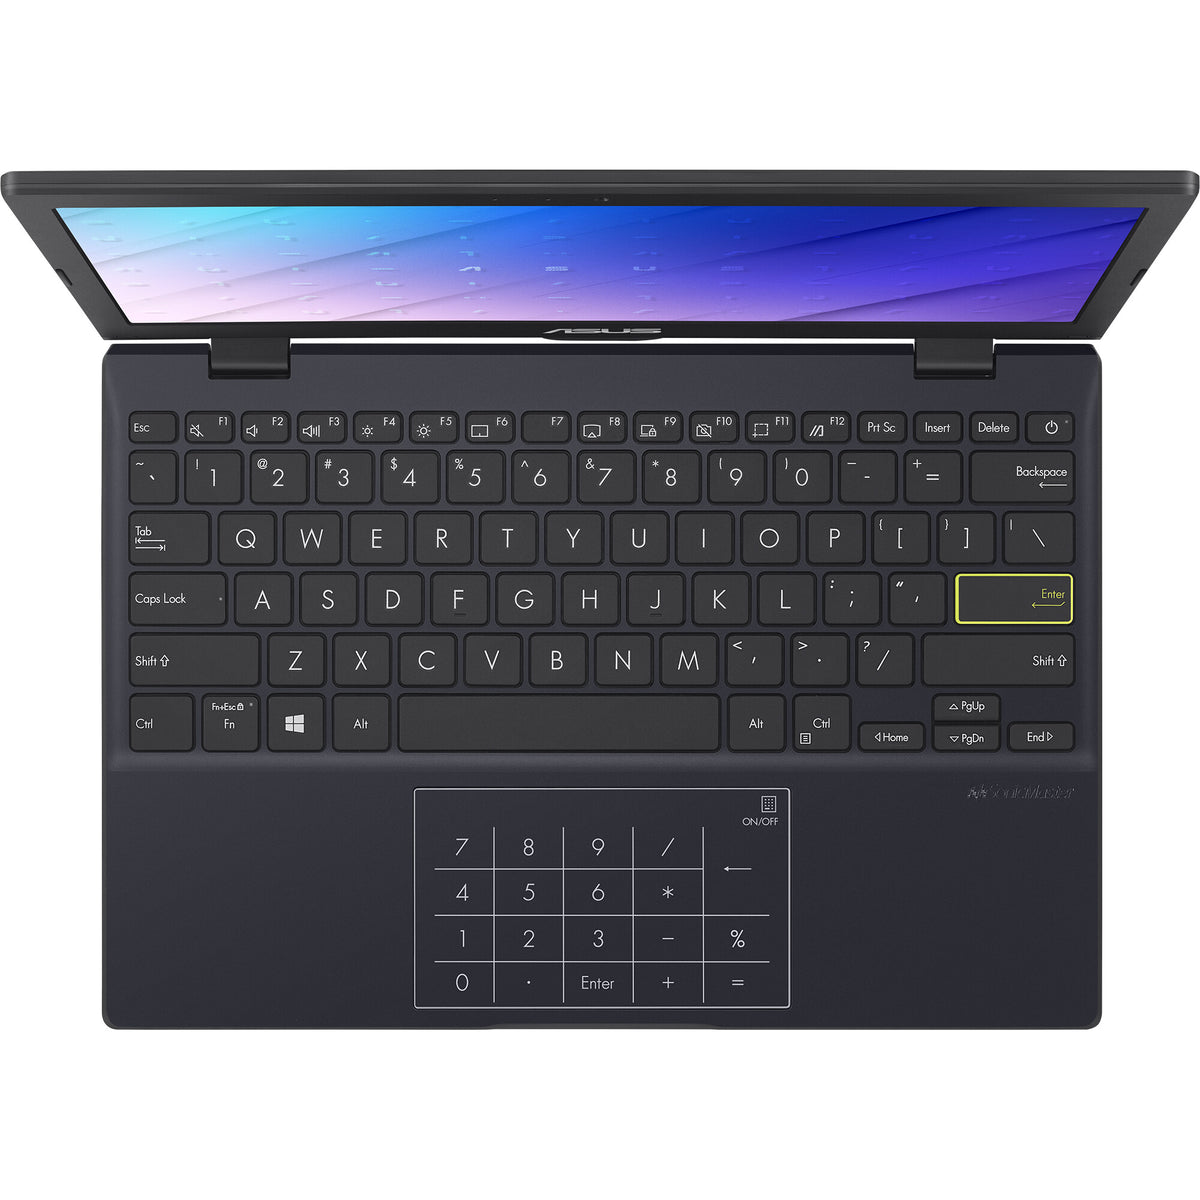 ASUS E210MA-GJ181TS Laptop - 29.5 cm (11.6&quot;) - Intel® Celeron® N4020 - 4 GB DDR4-SDRAM - 64 GB eMMC - Wi-Fi 5 - Windows 10 Home in S mode - Blue